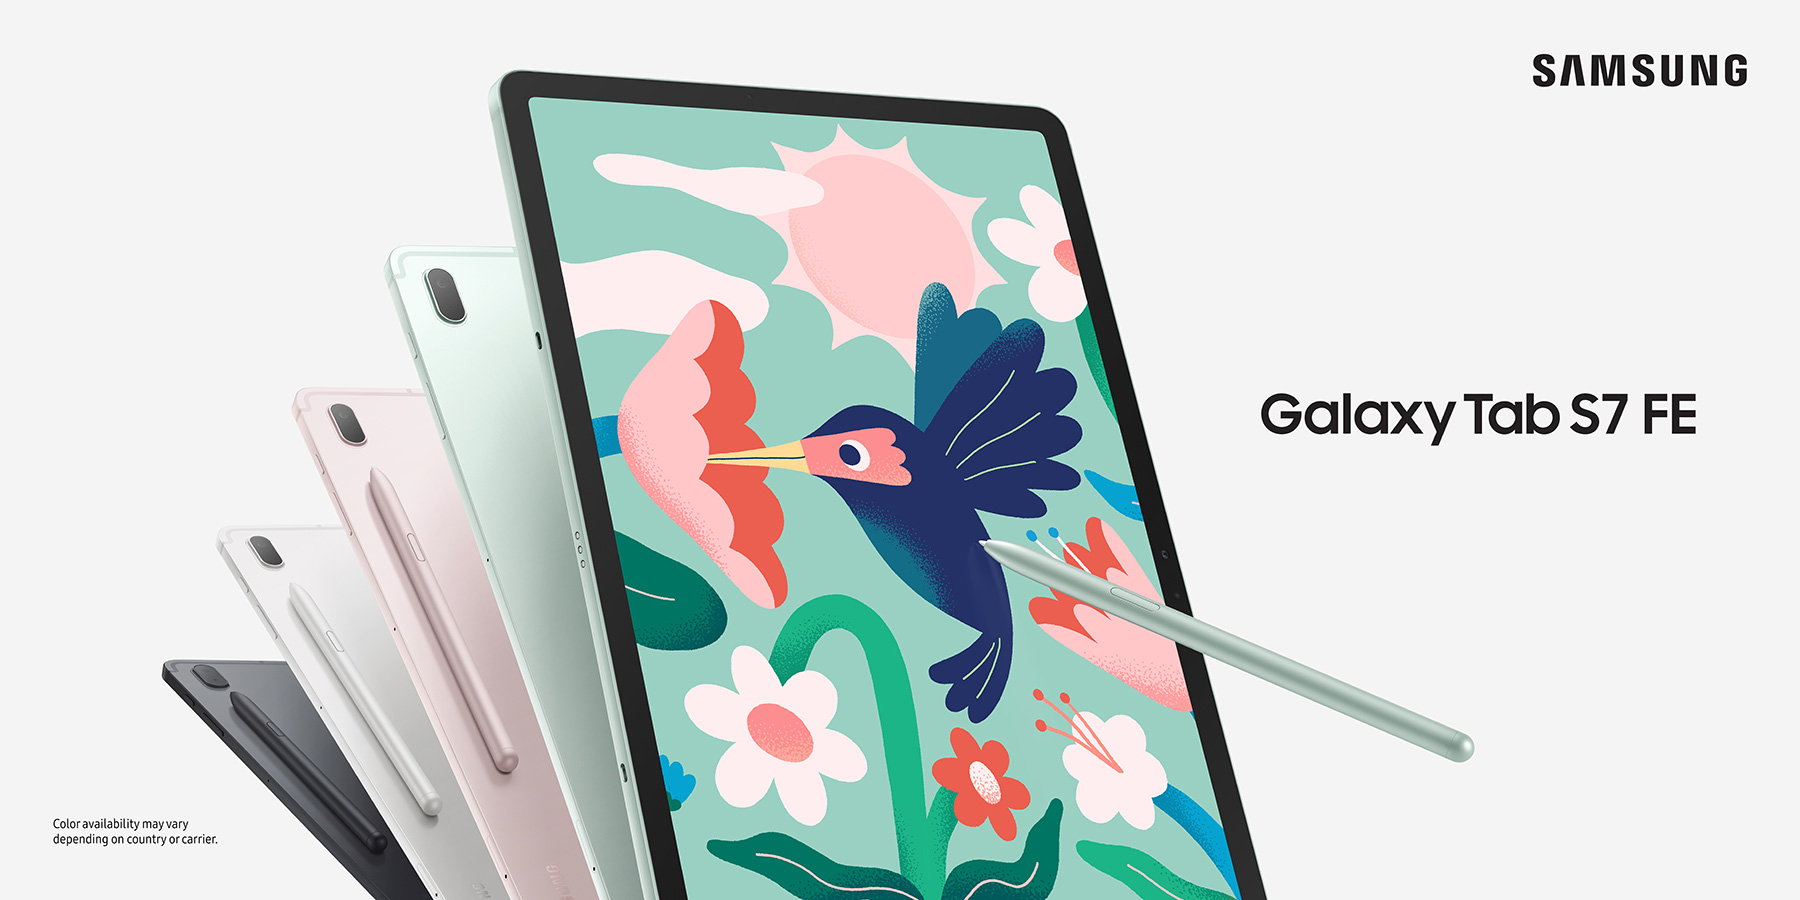 Galaxy Tab S7 FE Mystic Silver, Mystic Green, Mystic Pink, Mystic Black Models with S Pen extra wide